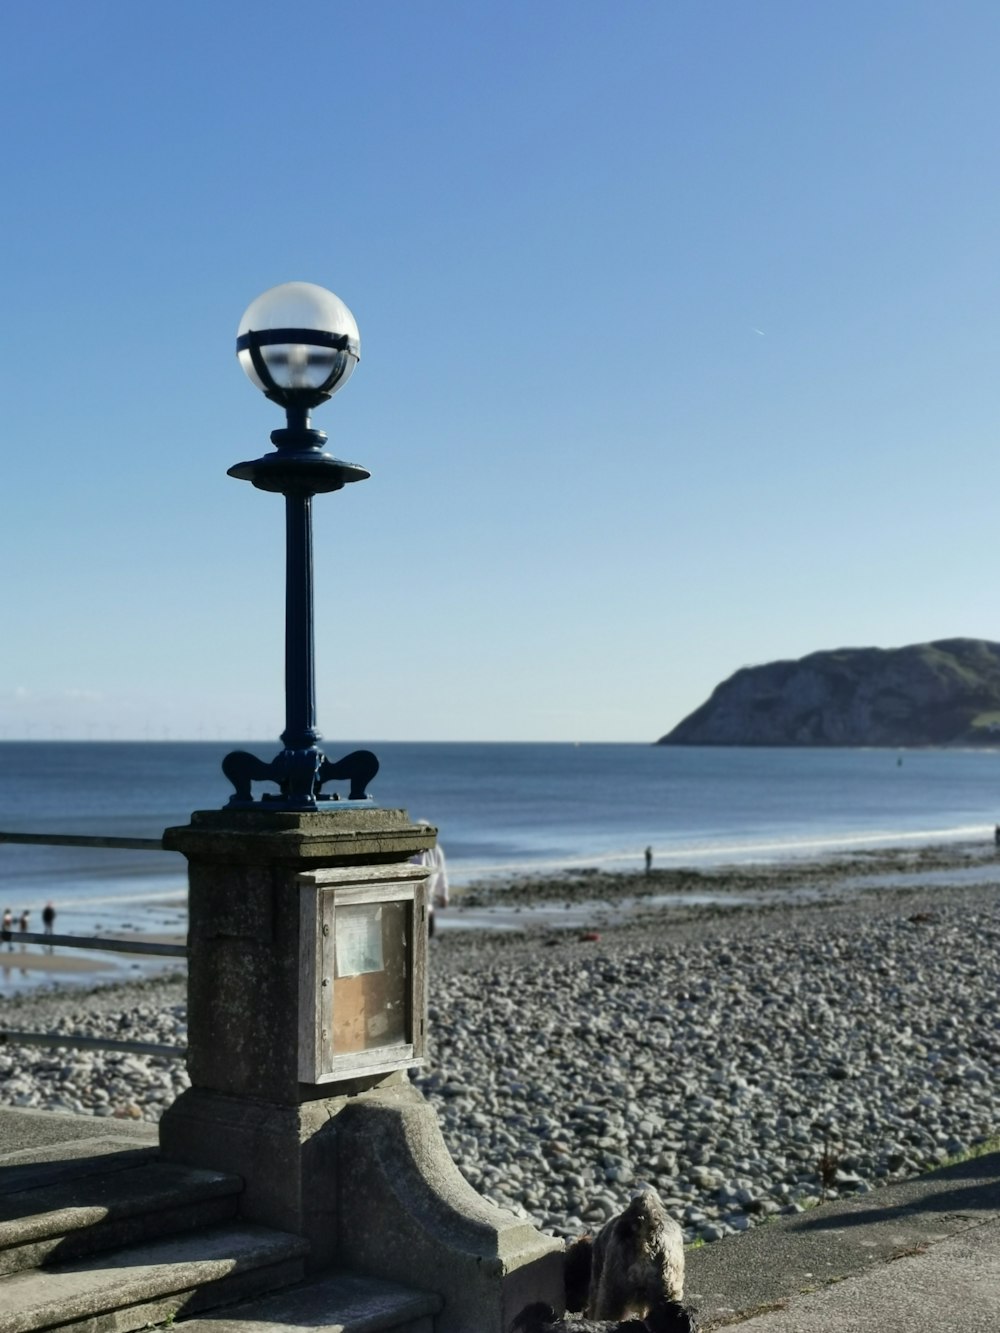 a lamp post on a rocky beach